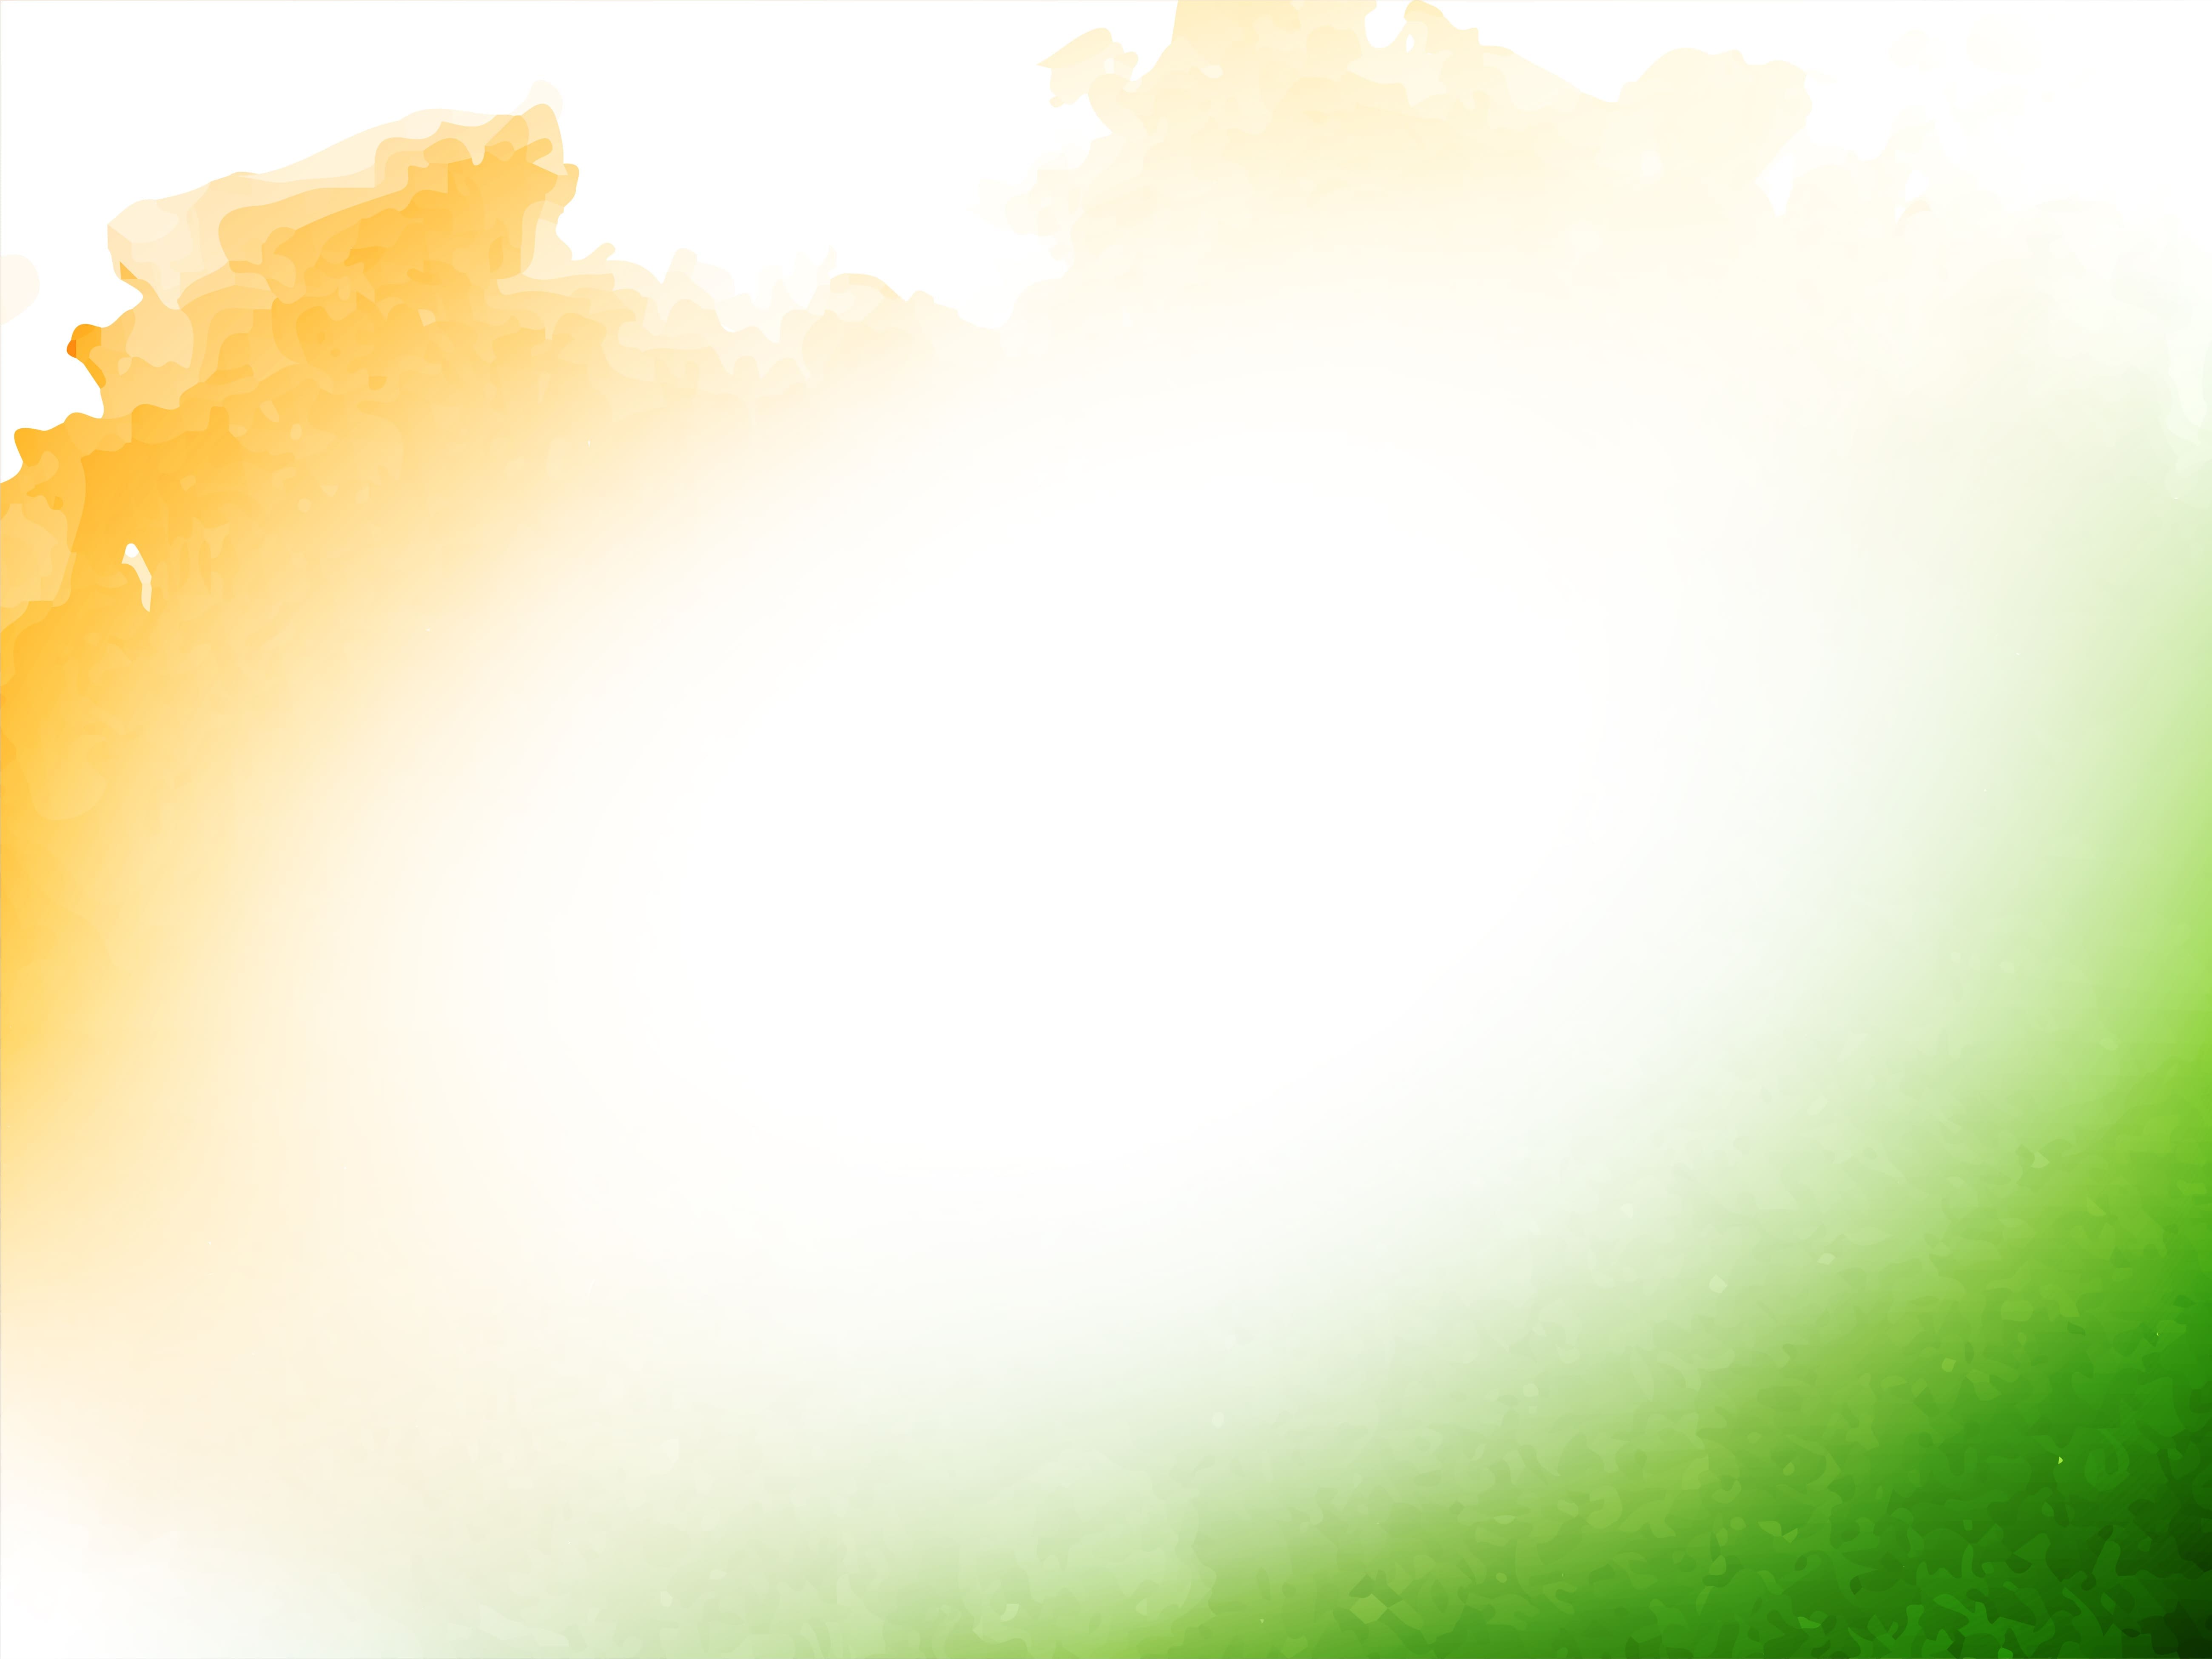 Indian National Flag Background